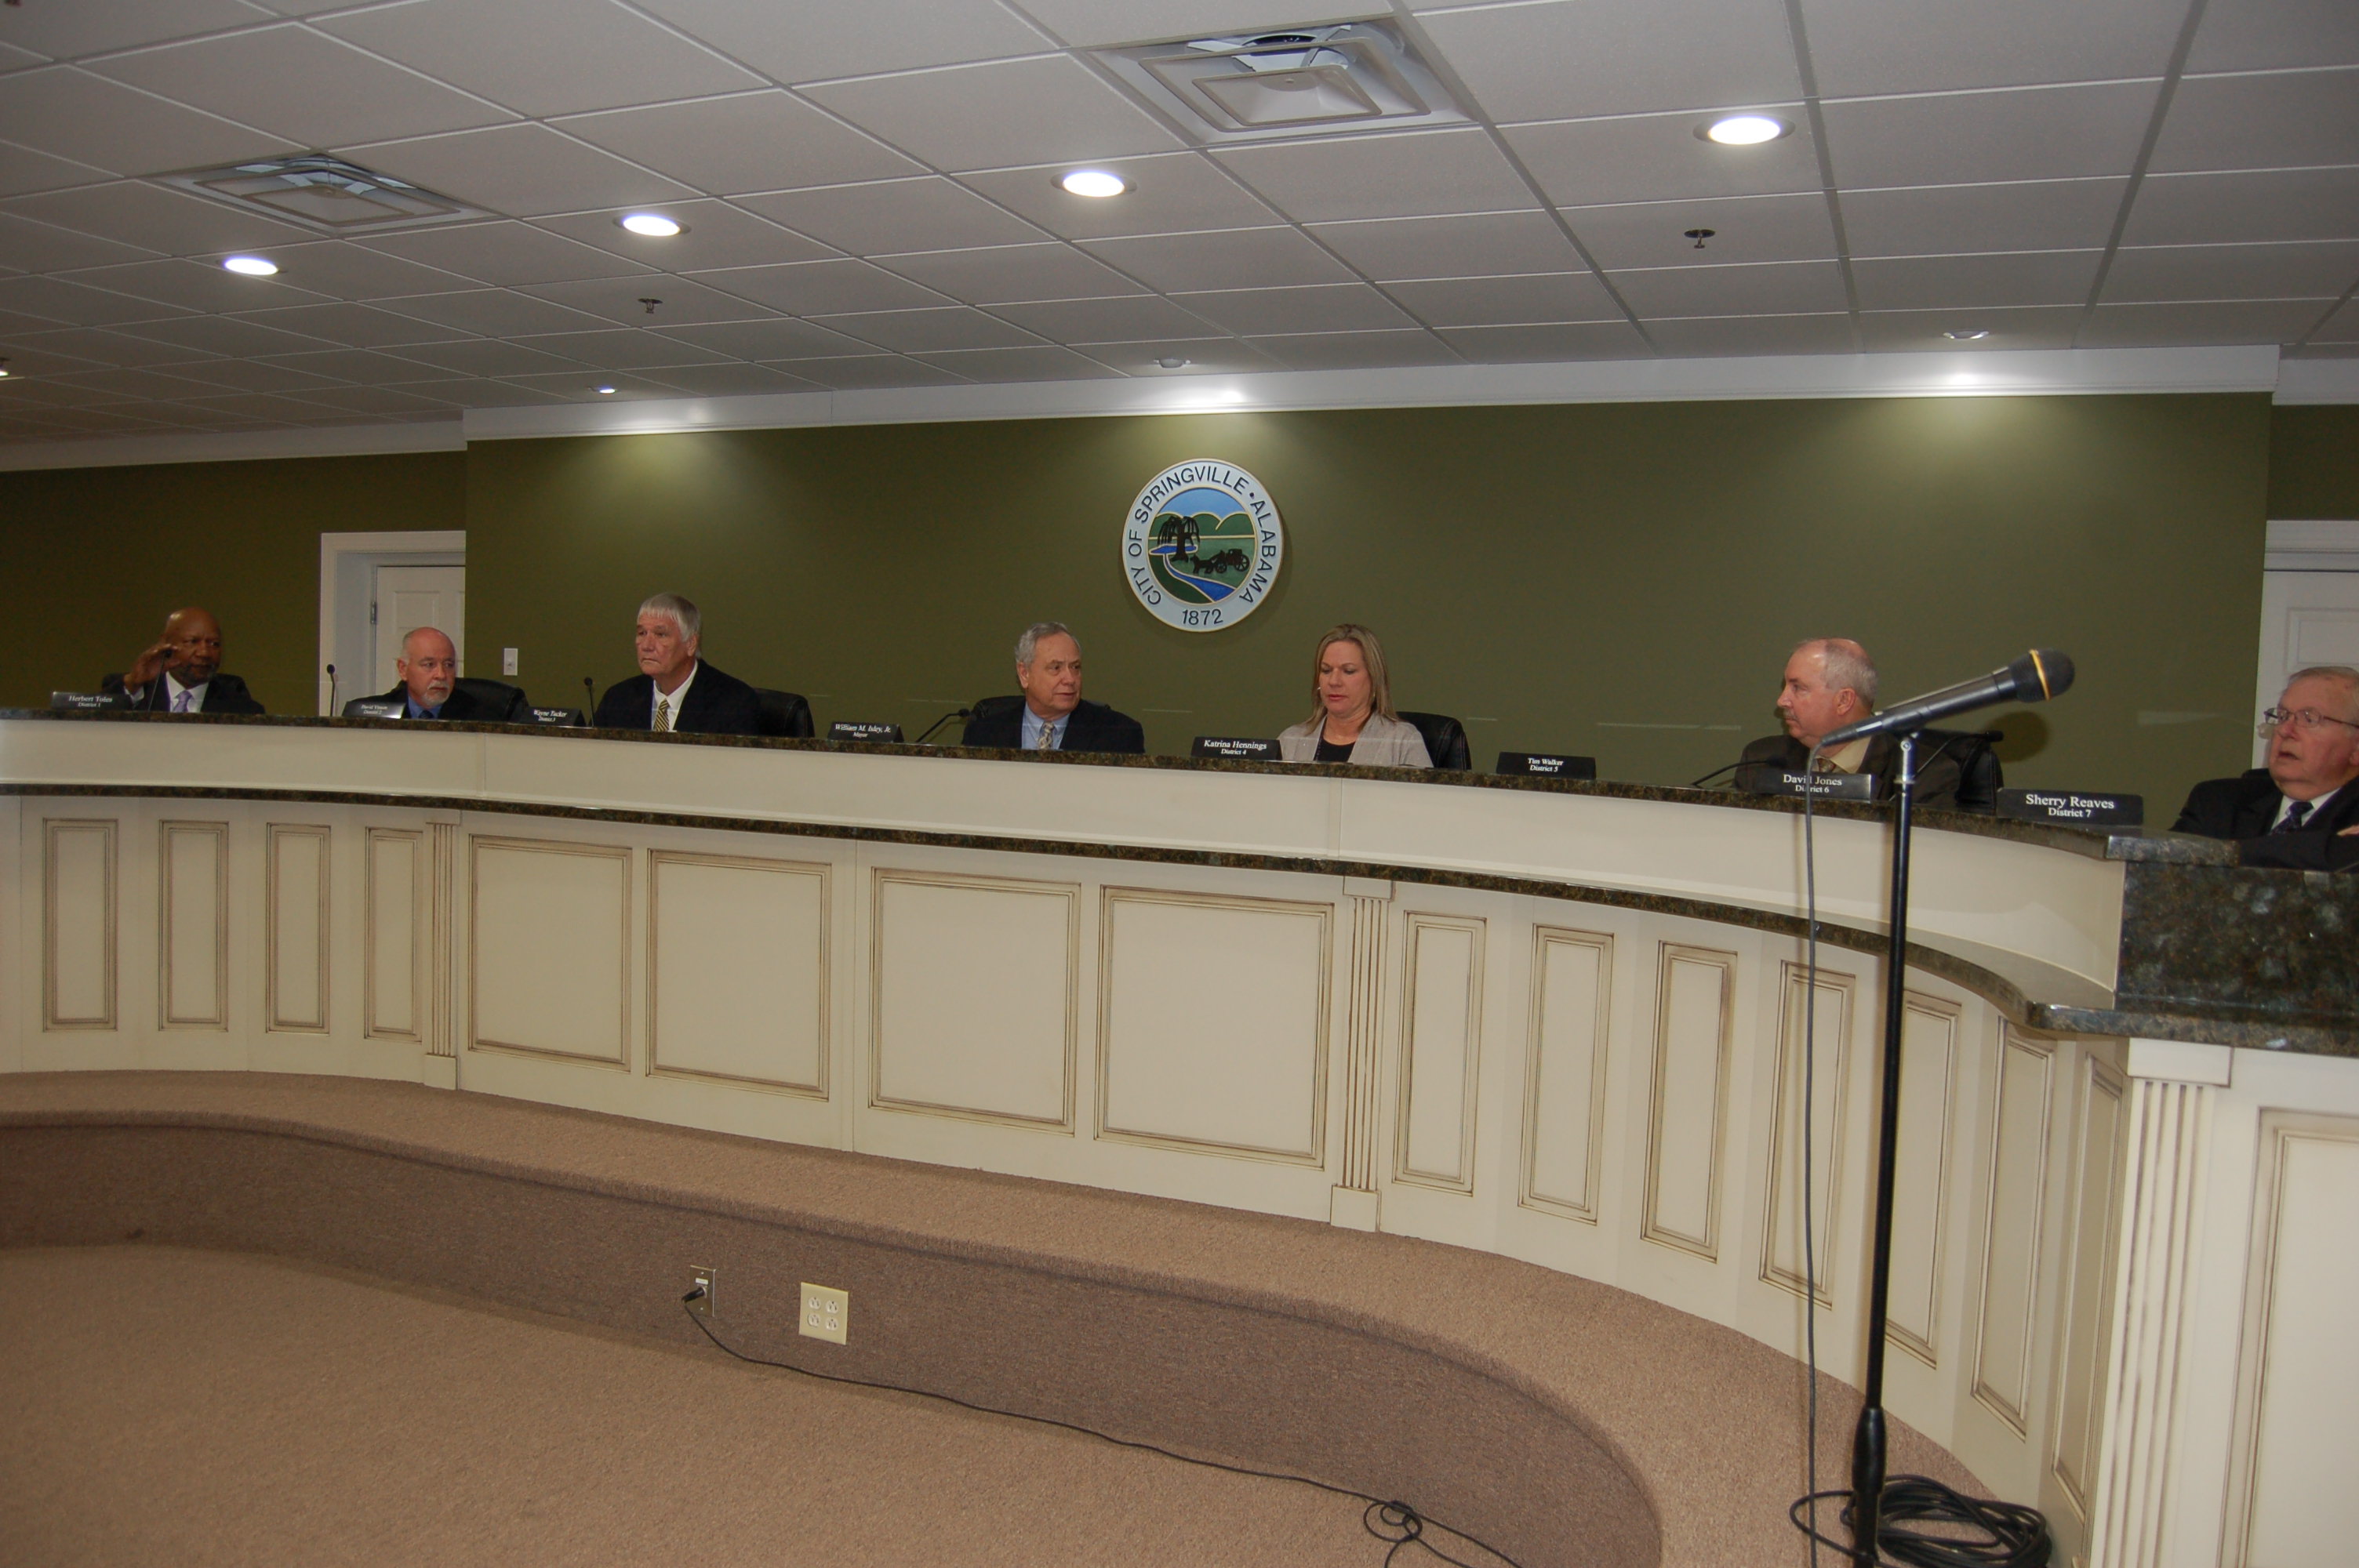 Springville City Council's agenda for Monday night